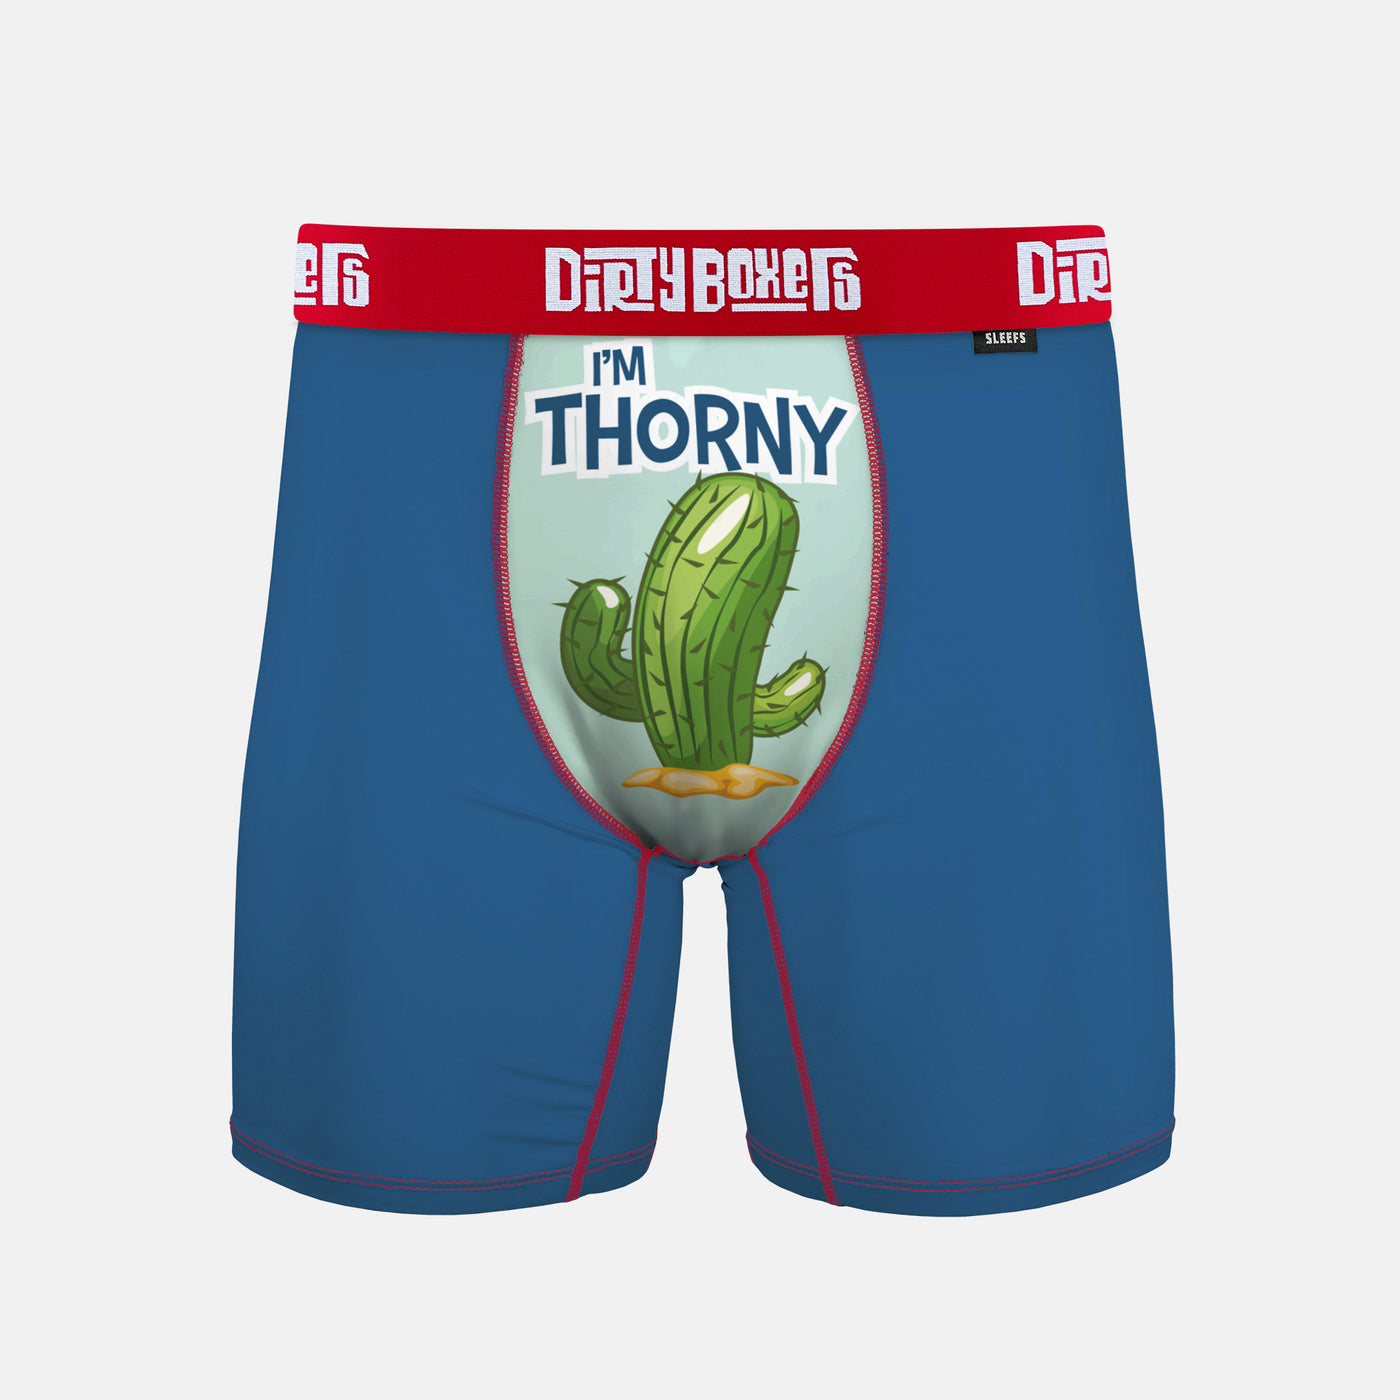 I'm Thorny Dirty Boxers Men's Underwear